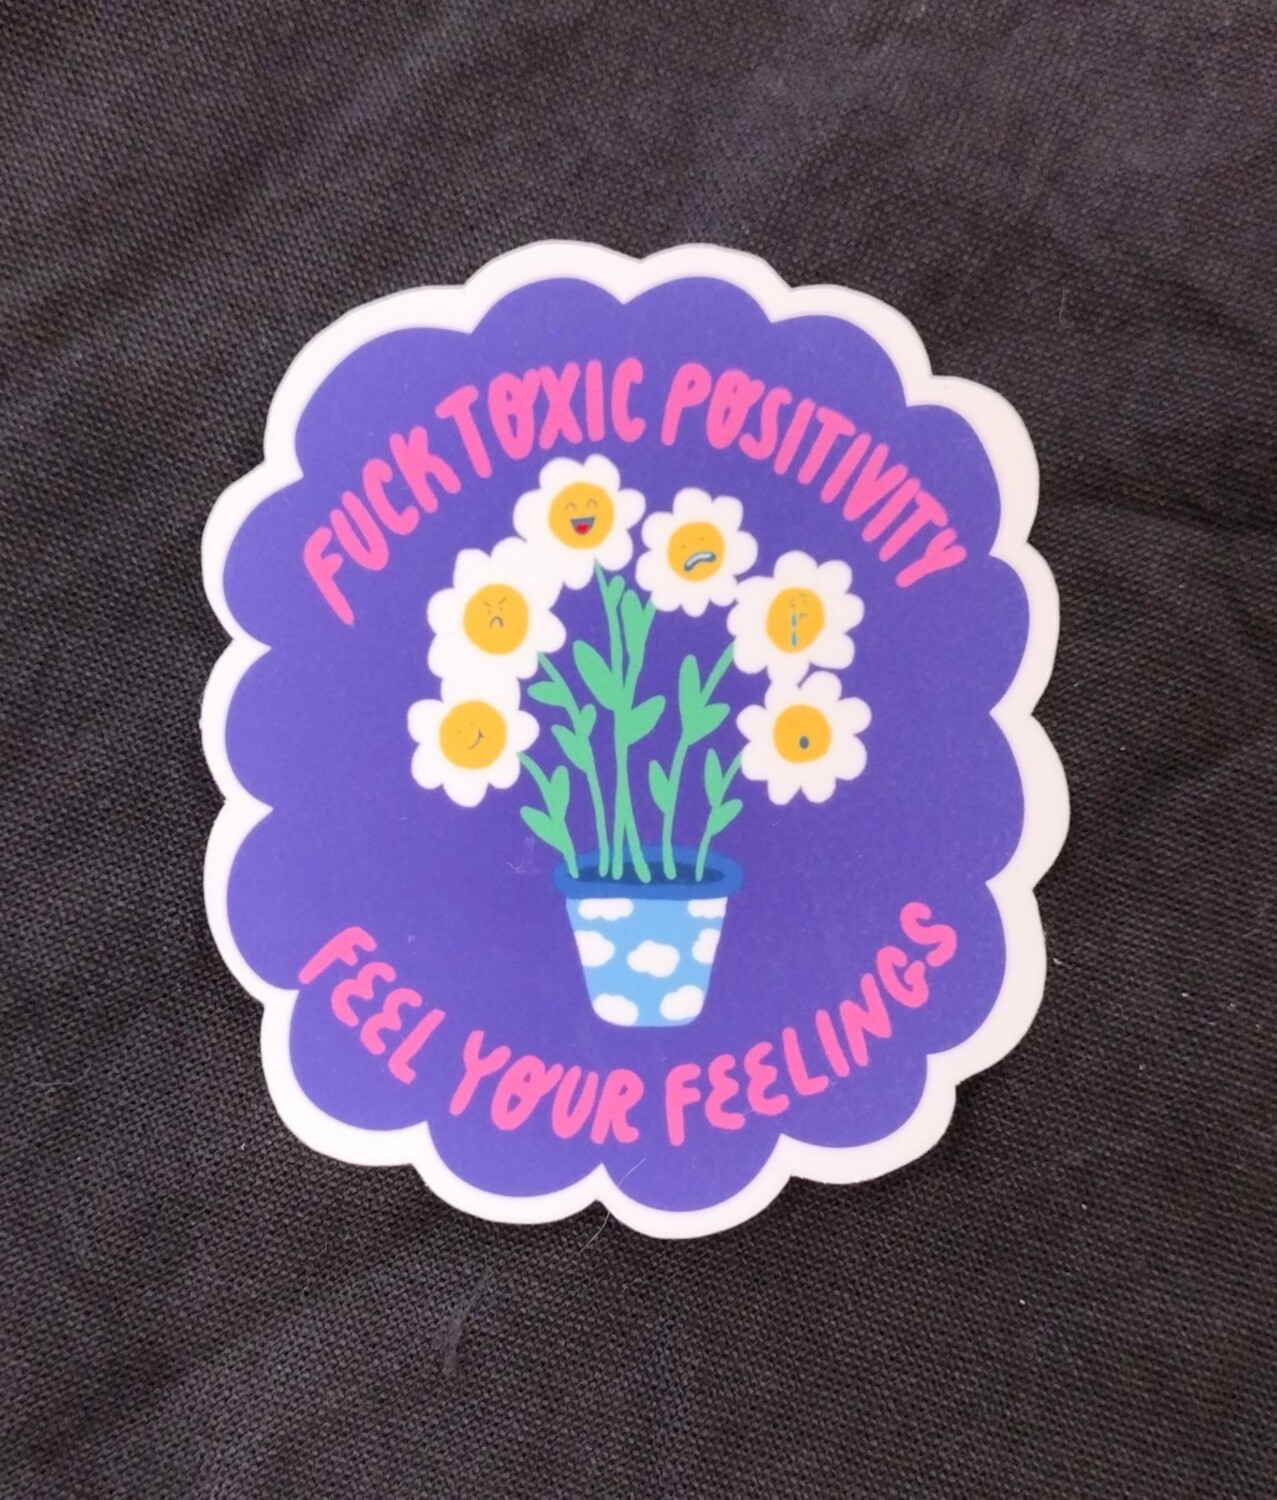 Fuck Toxic Positivity, Feel Your Feelings - Sticker by Chiaralascura